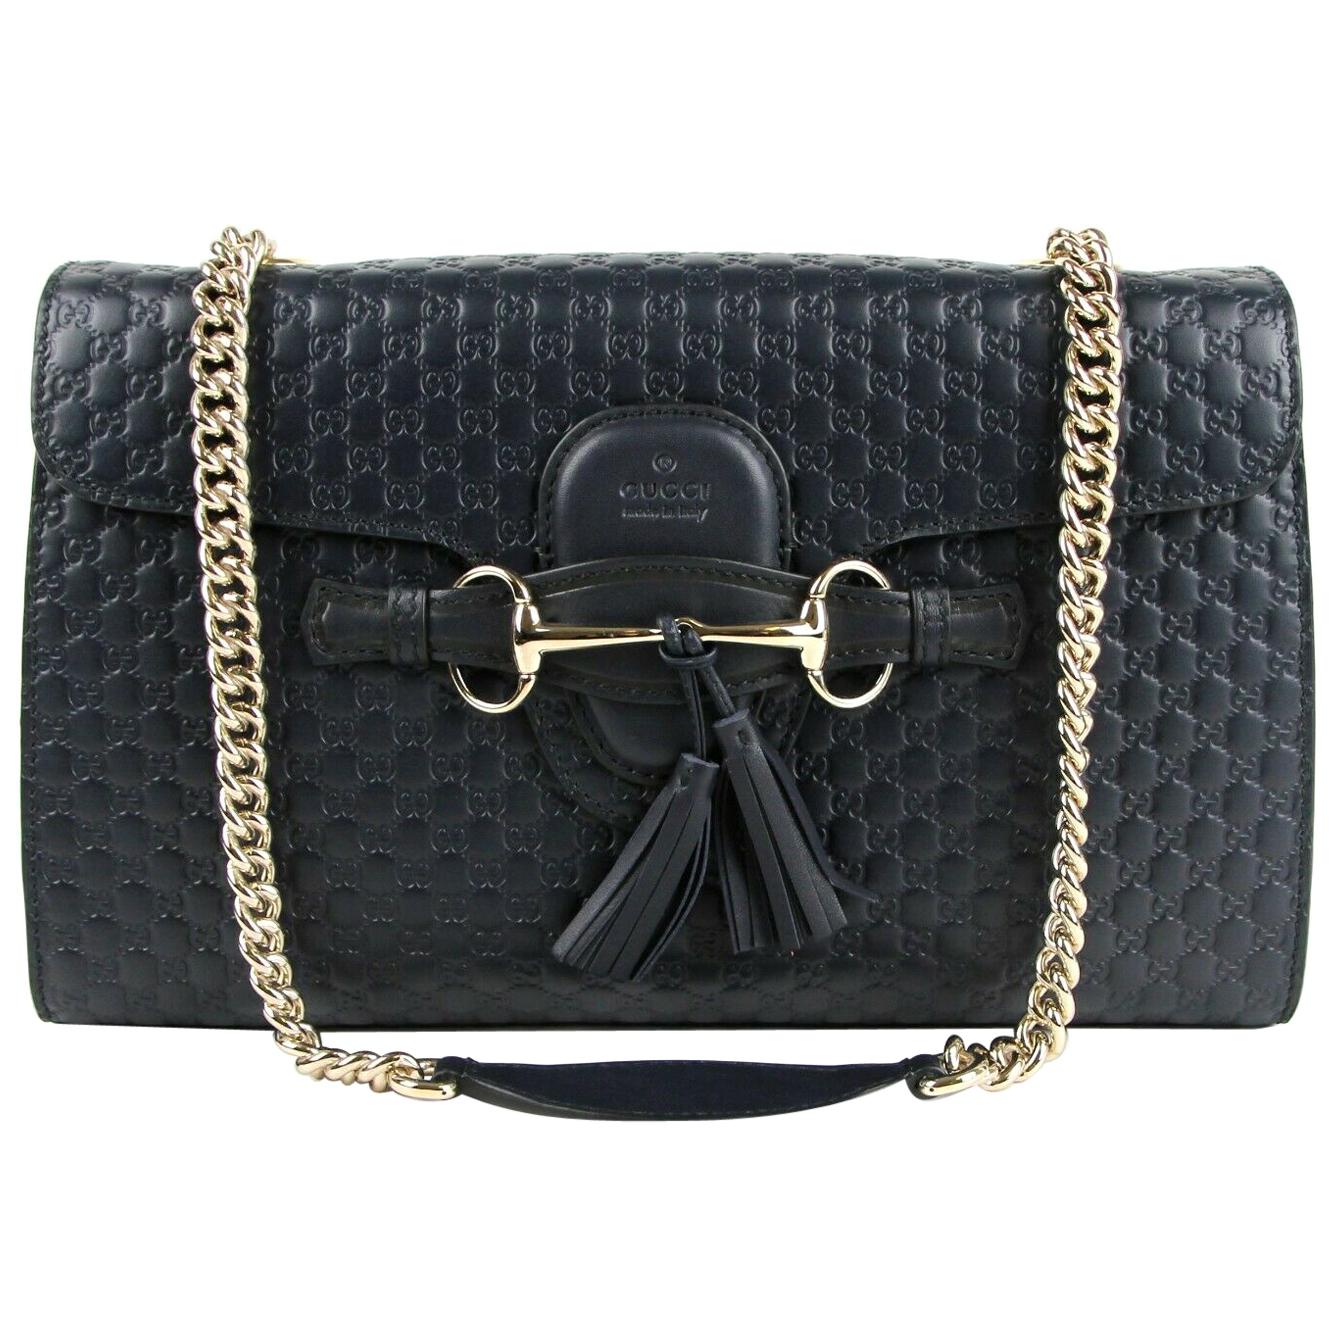 Gucci Black Microguccissia Leather Medium Emily Shoulder Bag